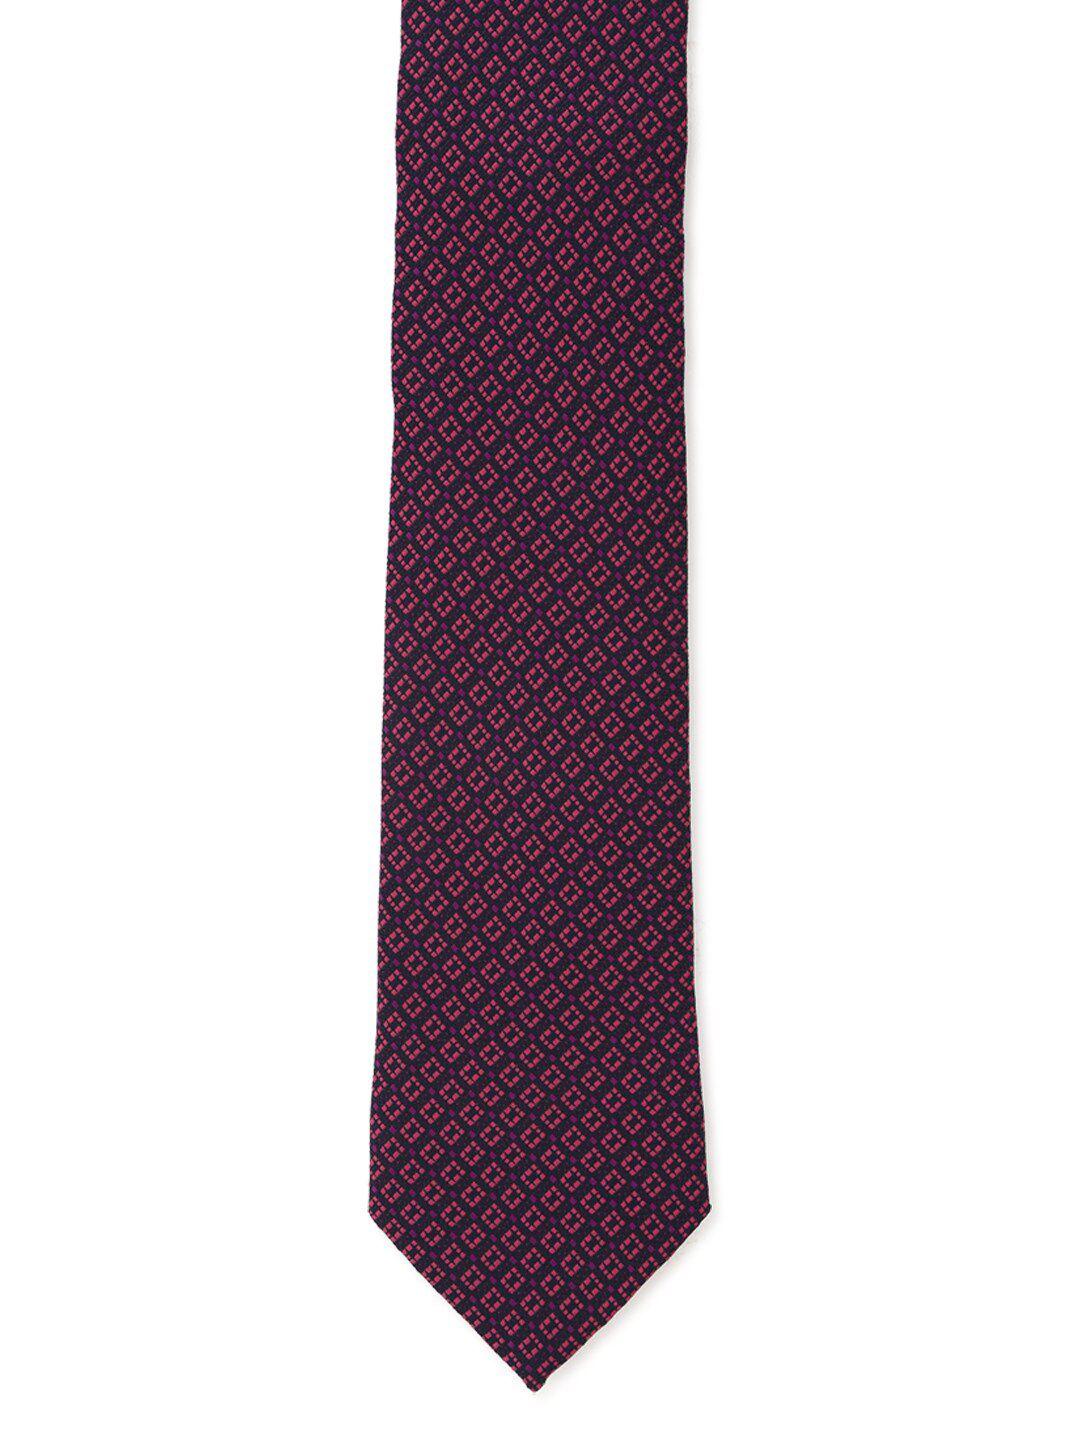 louis philippe men purple & peach-coloured printed broad tie